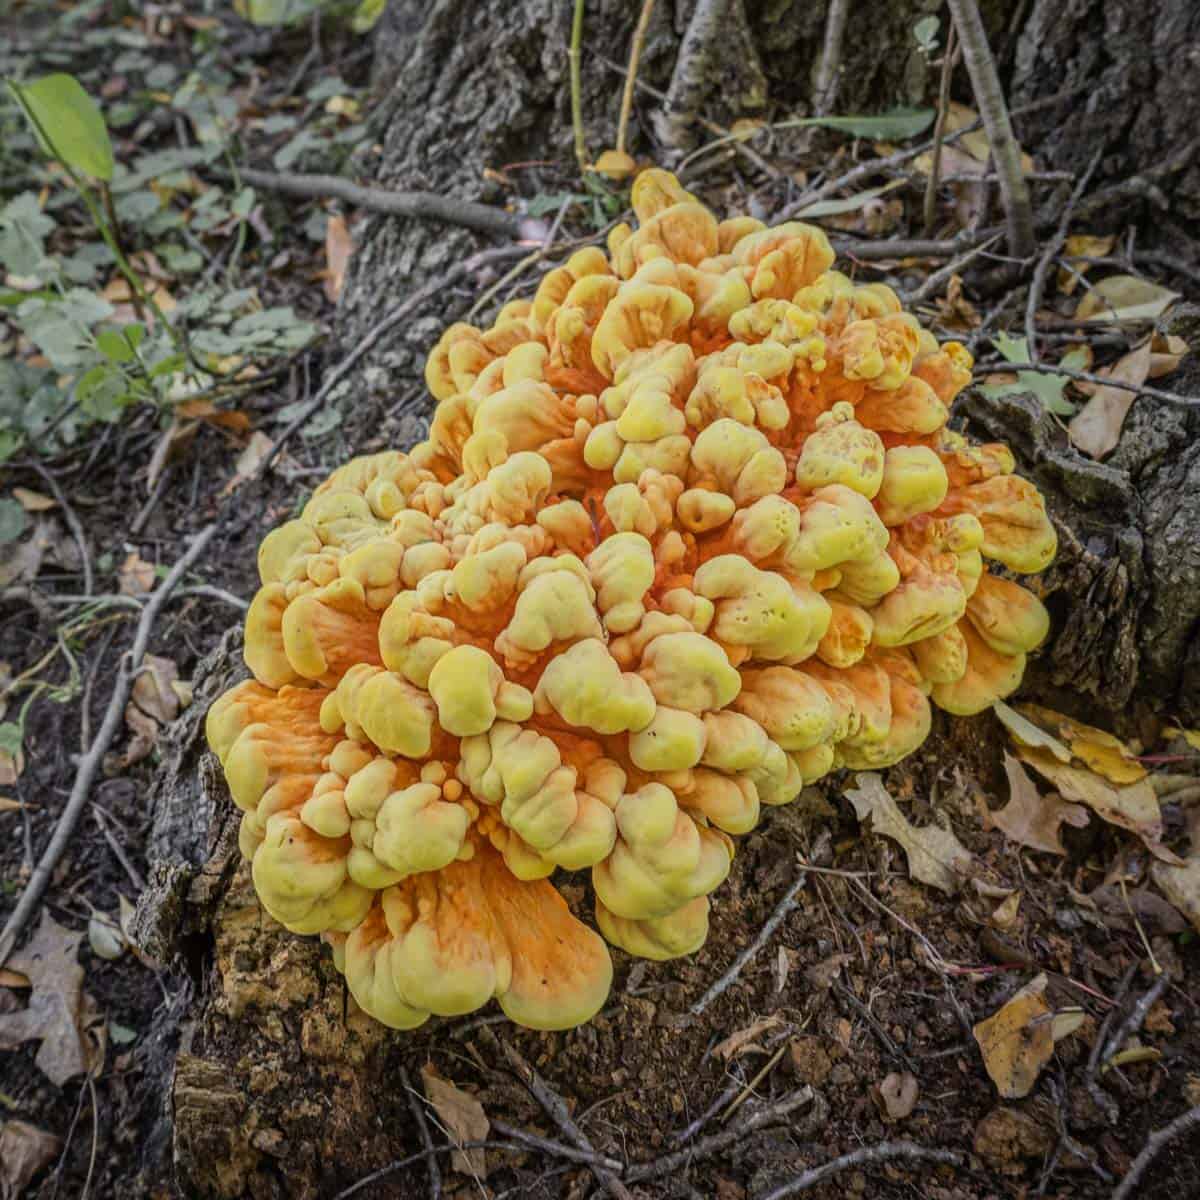 A young orange mushroom growing on a log.